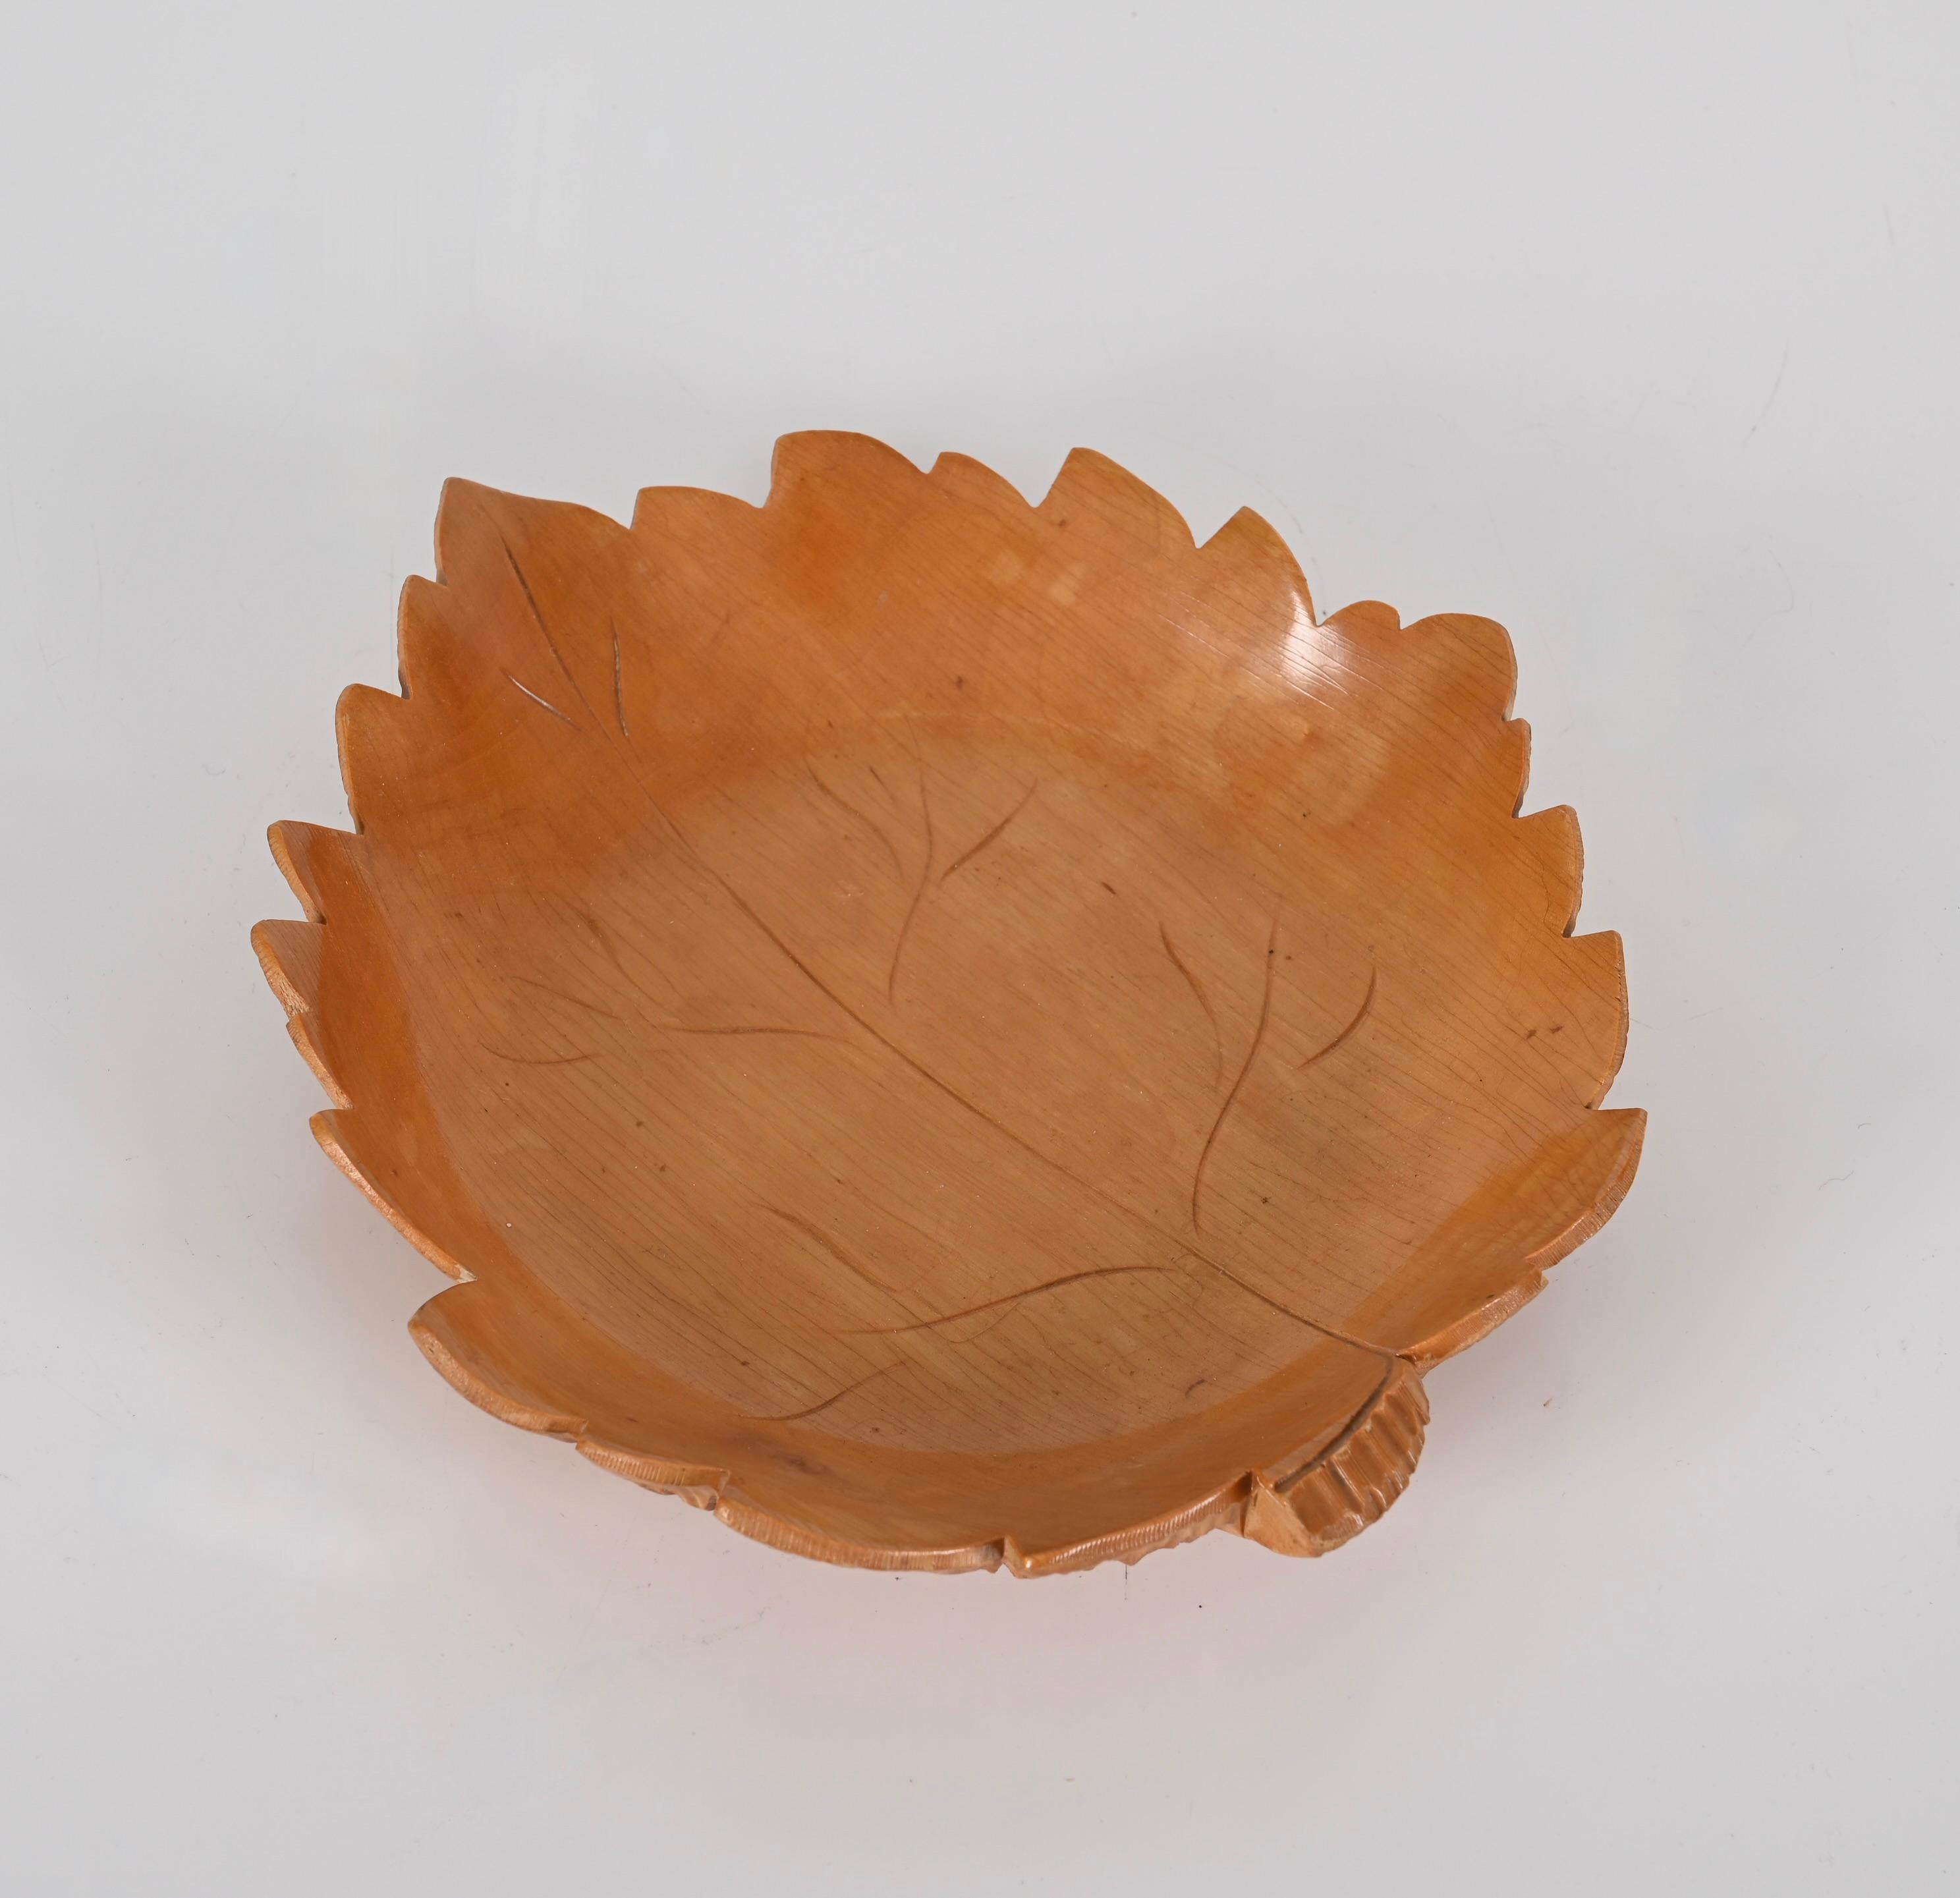 Italian Handmade Maple Leaf Shaped Centerpiece, Aldo Tura for Macabo, 1950s For Sale 4